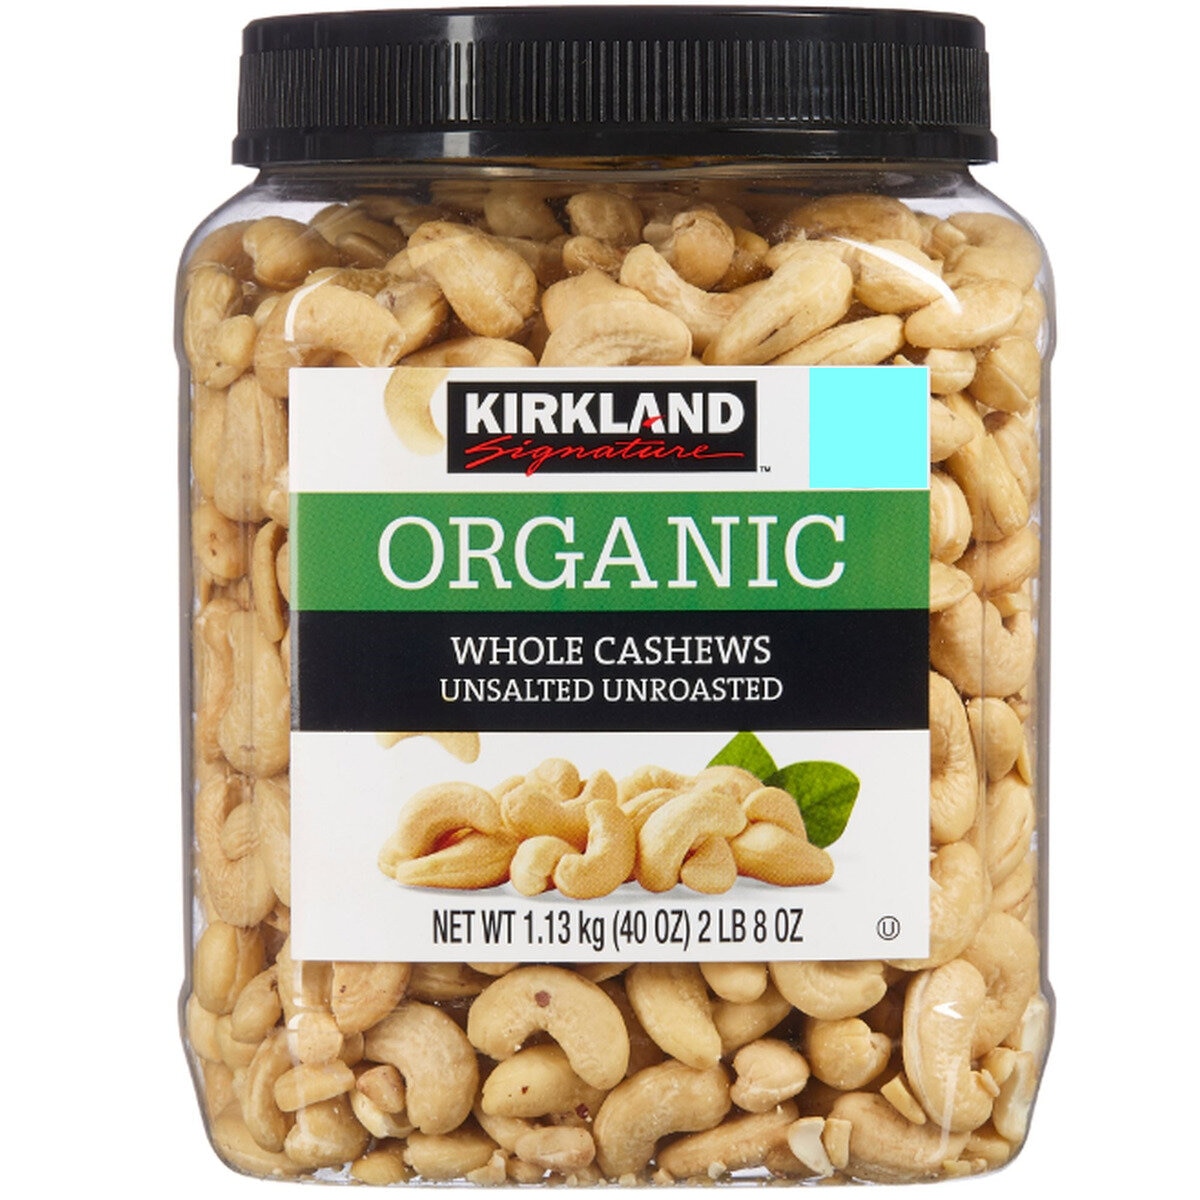 Kirkland Signature Organic Unsalted Whole Cashews 1.13kg